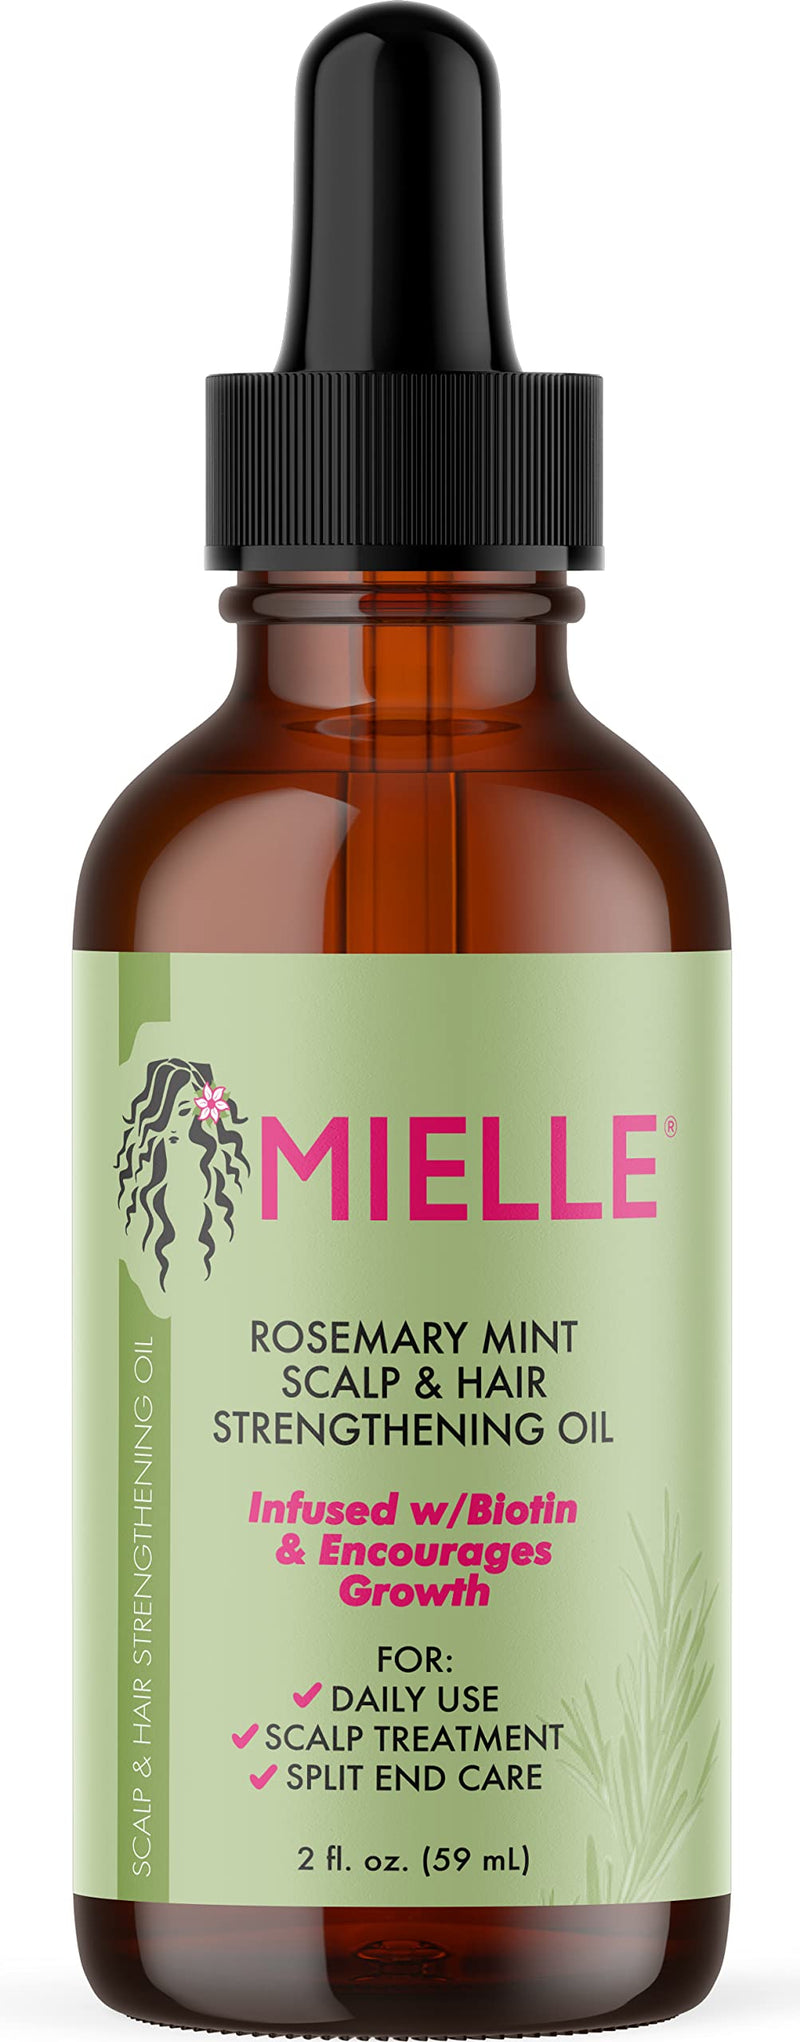 Mielle Organics Scalp & Hair Strengthening Oil with Rosemary Mint, Biotin & Essential Oils (2 fl oz) - For Split Ends, Dry Scalp & Hair Growth, All Hair Types.